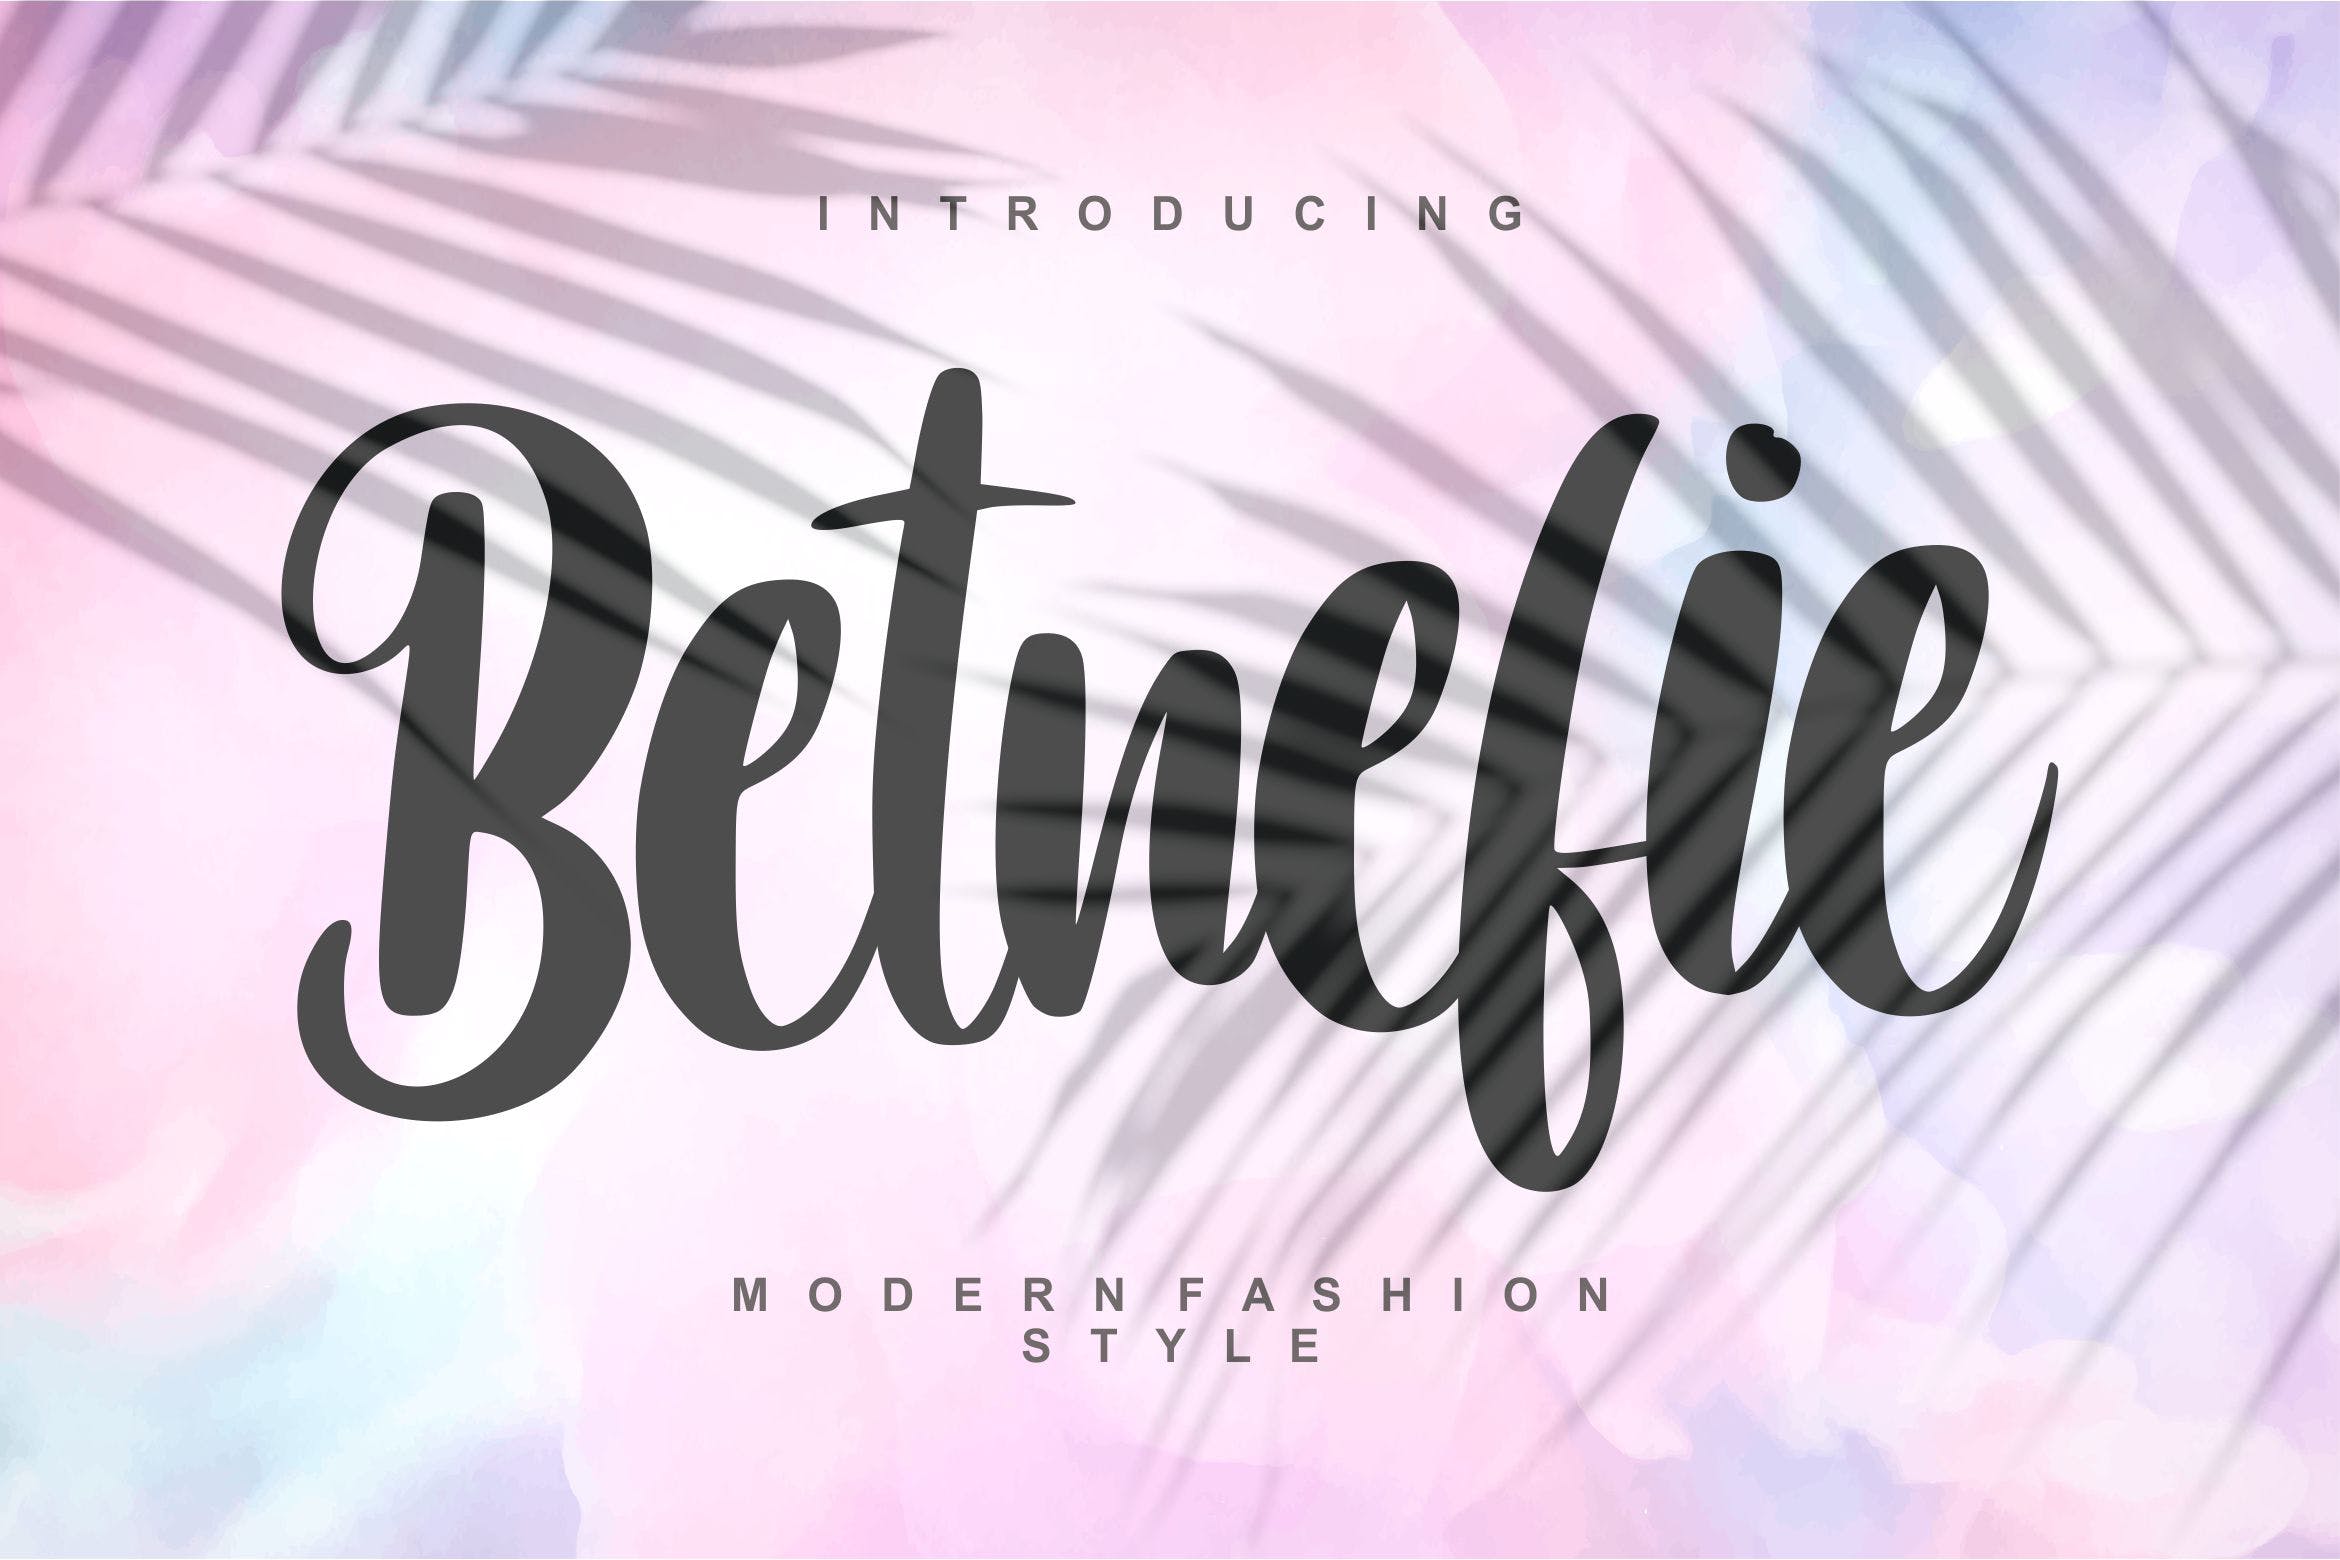 现代时尚风格英文书法字体素材库精选 Betnefie | Modern Fashion Style Font插图